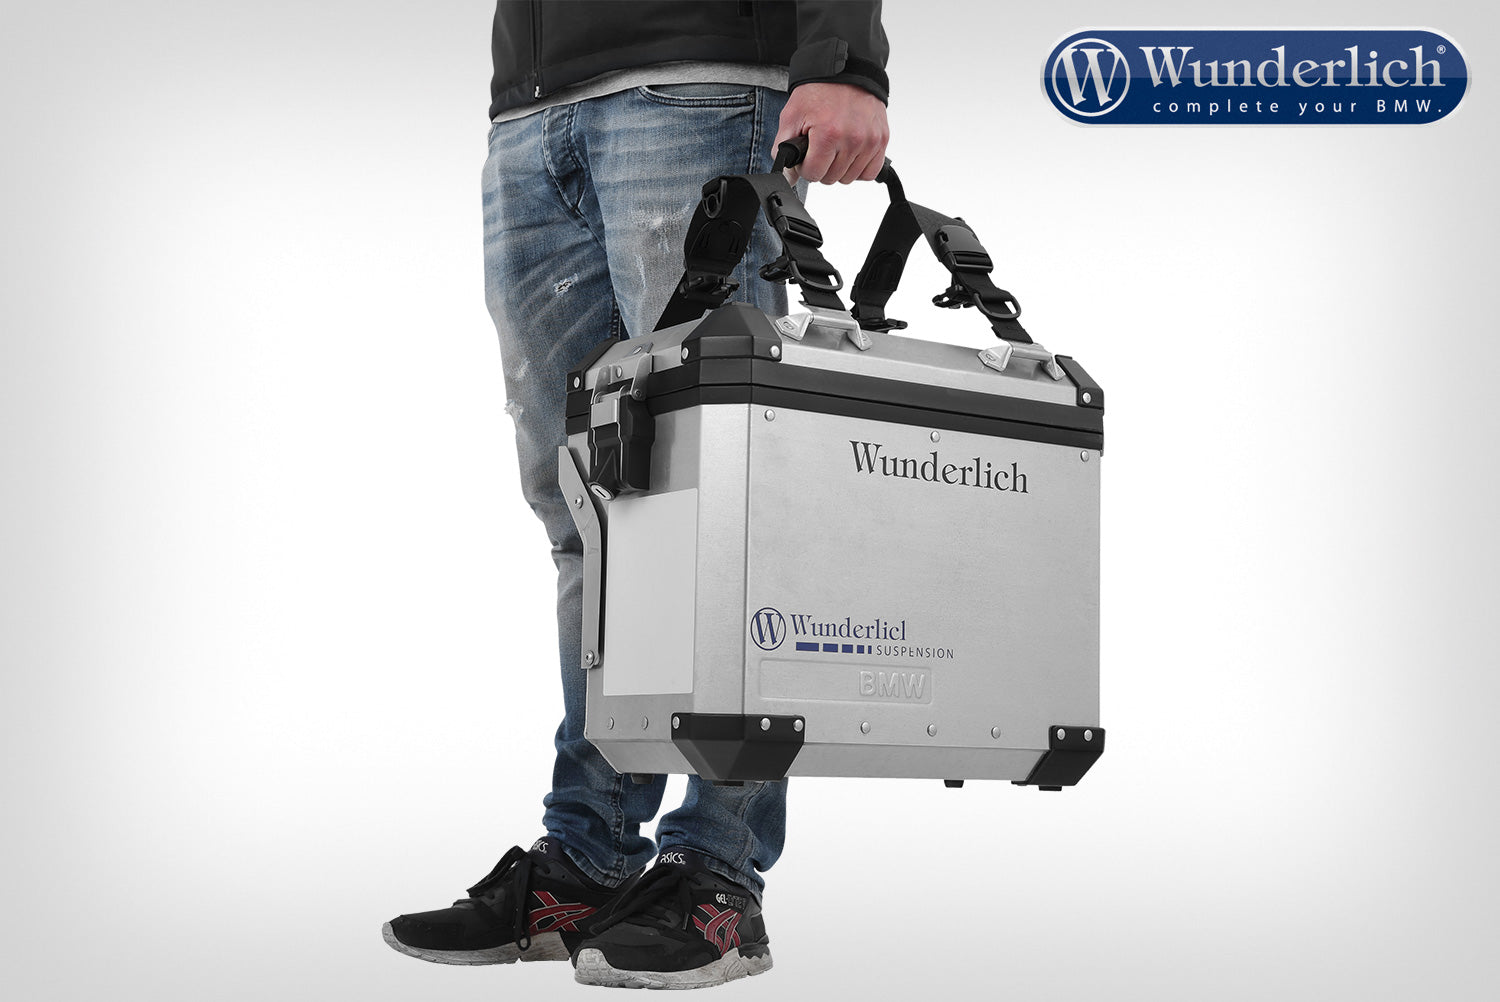 Wunderlich Rack Pack WP40 (incl. quick fastening) - Set - black